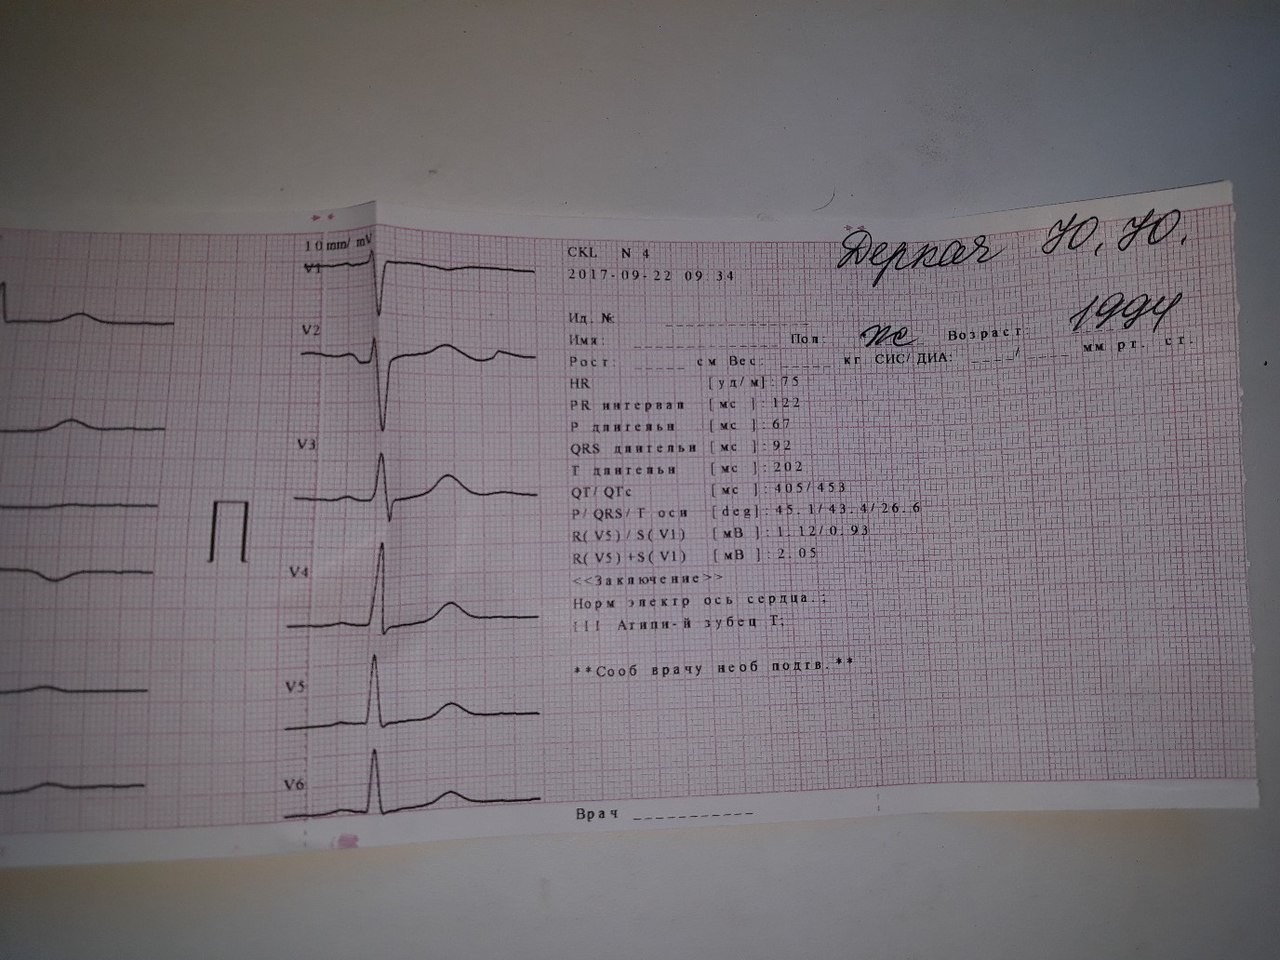 расшифровка кардиограммы сердца по фото